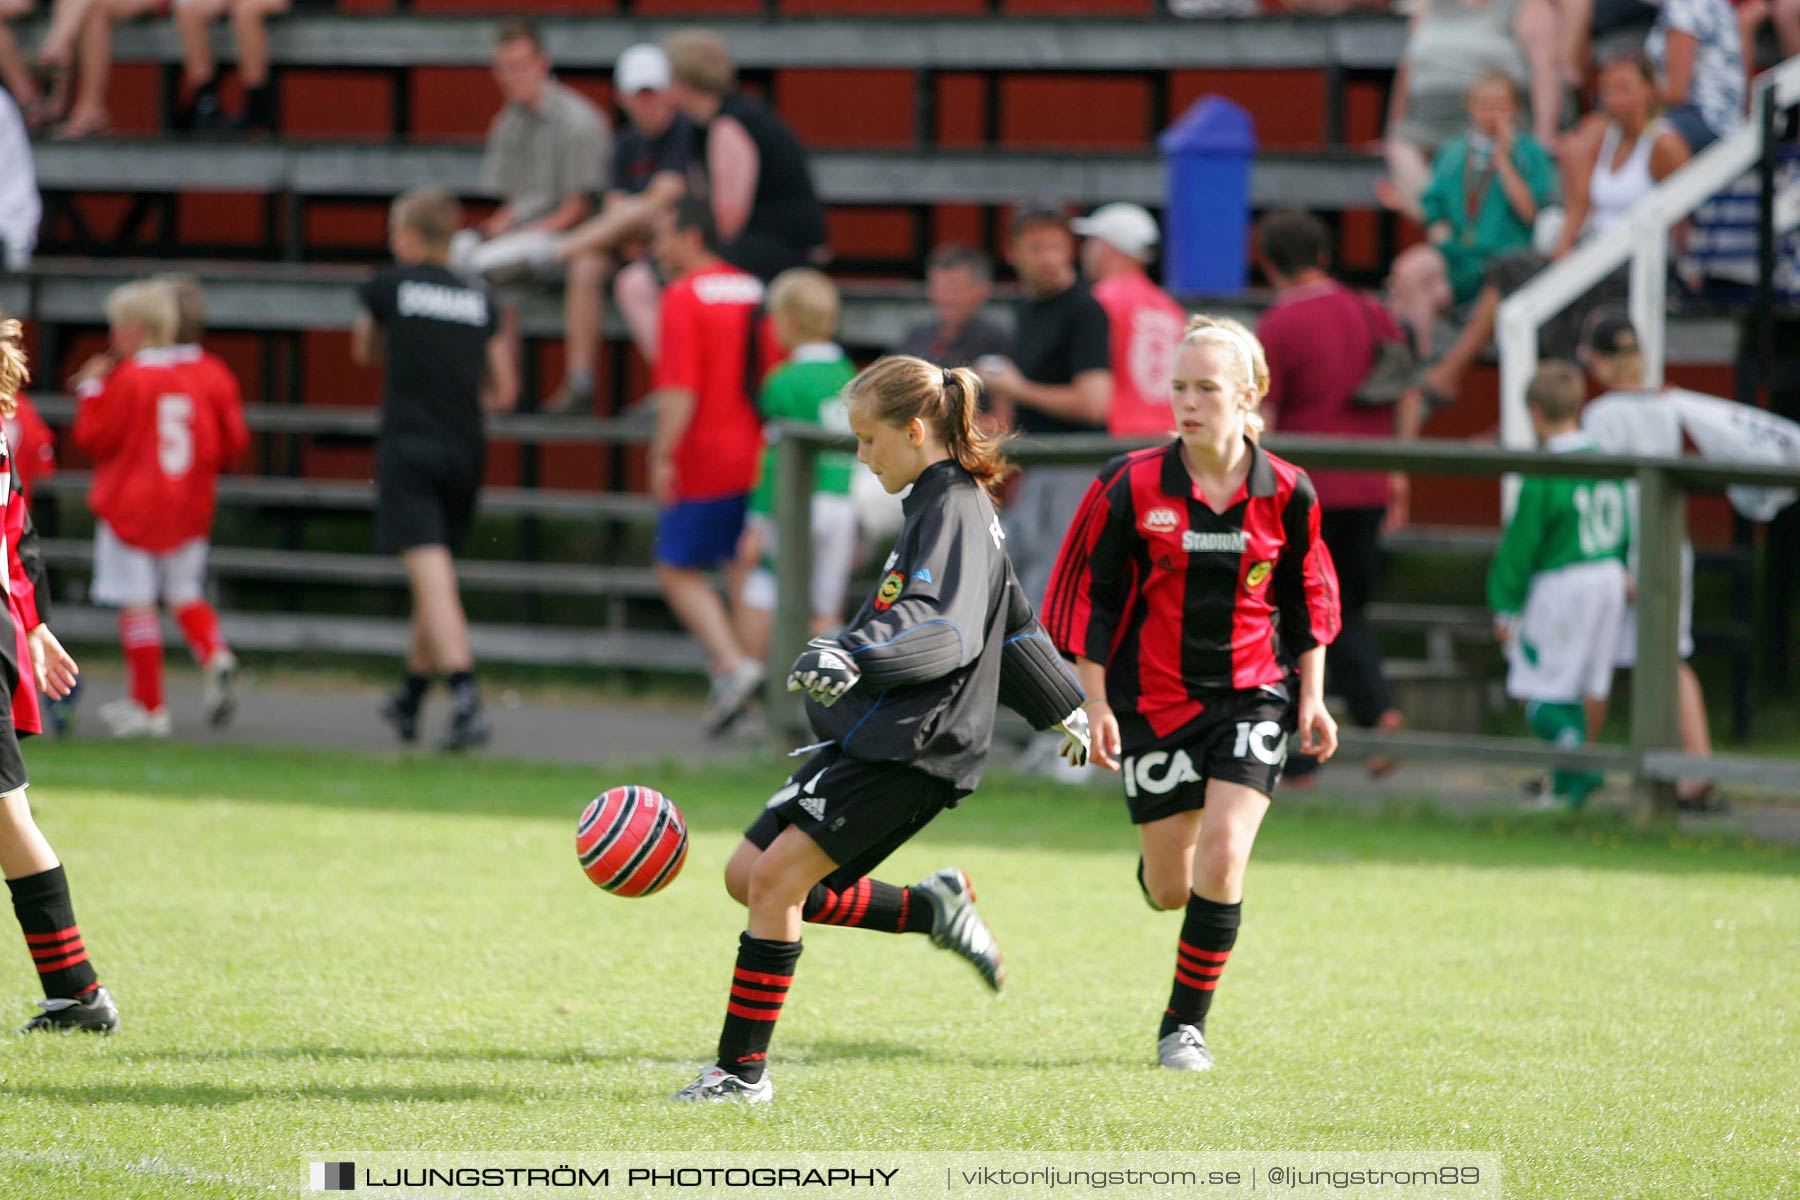 Ulvacupen 2006,mix,Åbrovallen,Ulvåker,Sverige,Fotboll,,2006,147374